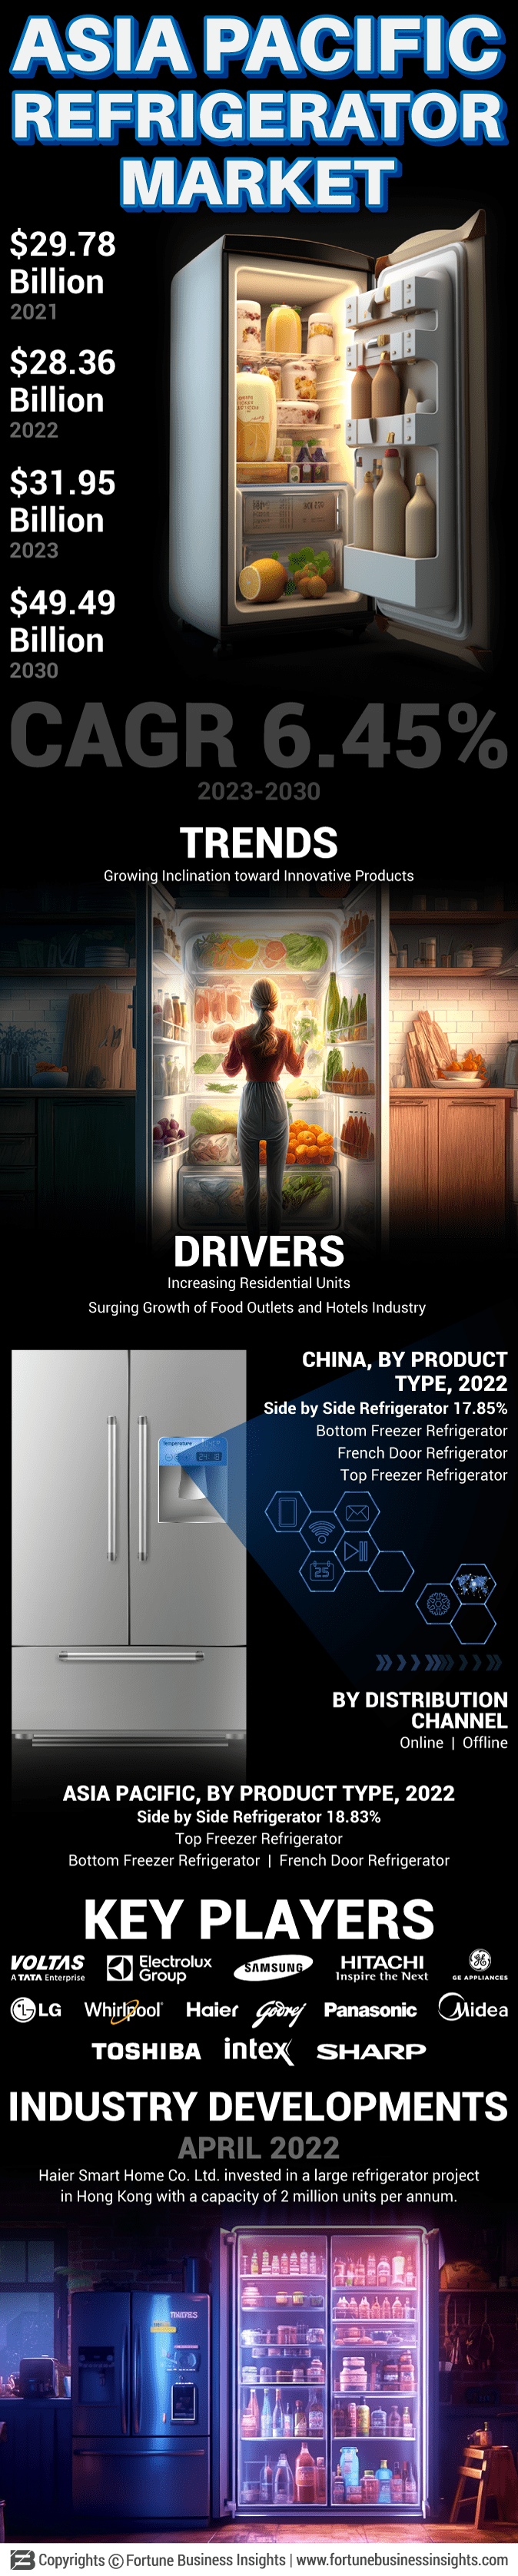 Asia Pacific Refrigerator Market